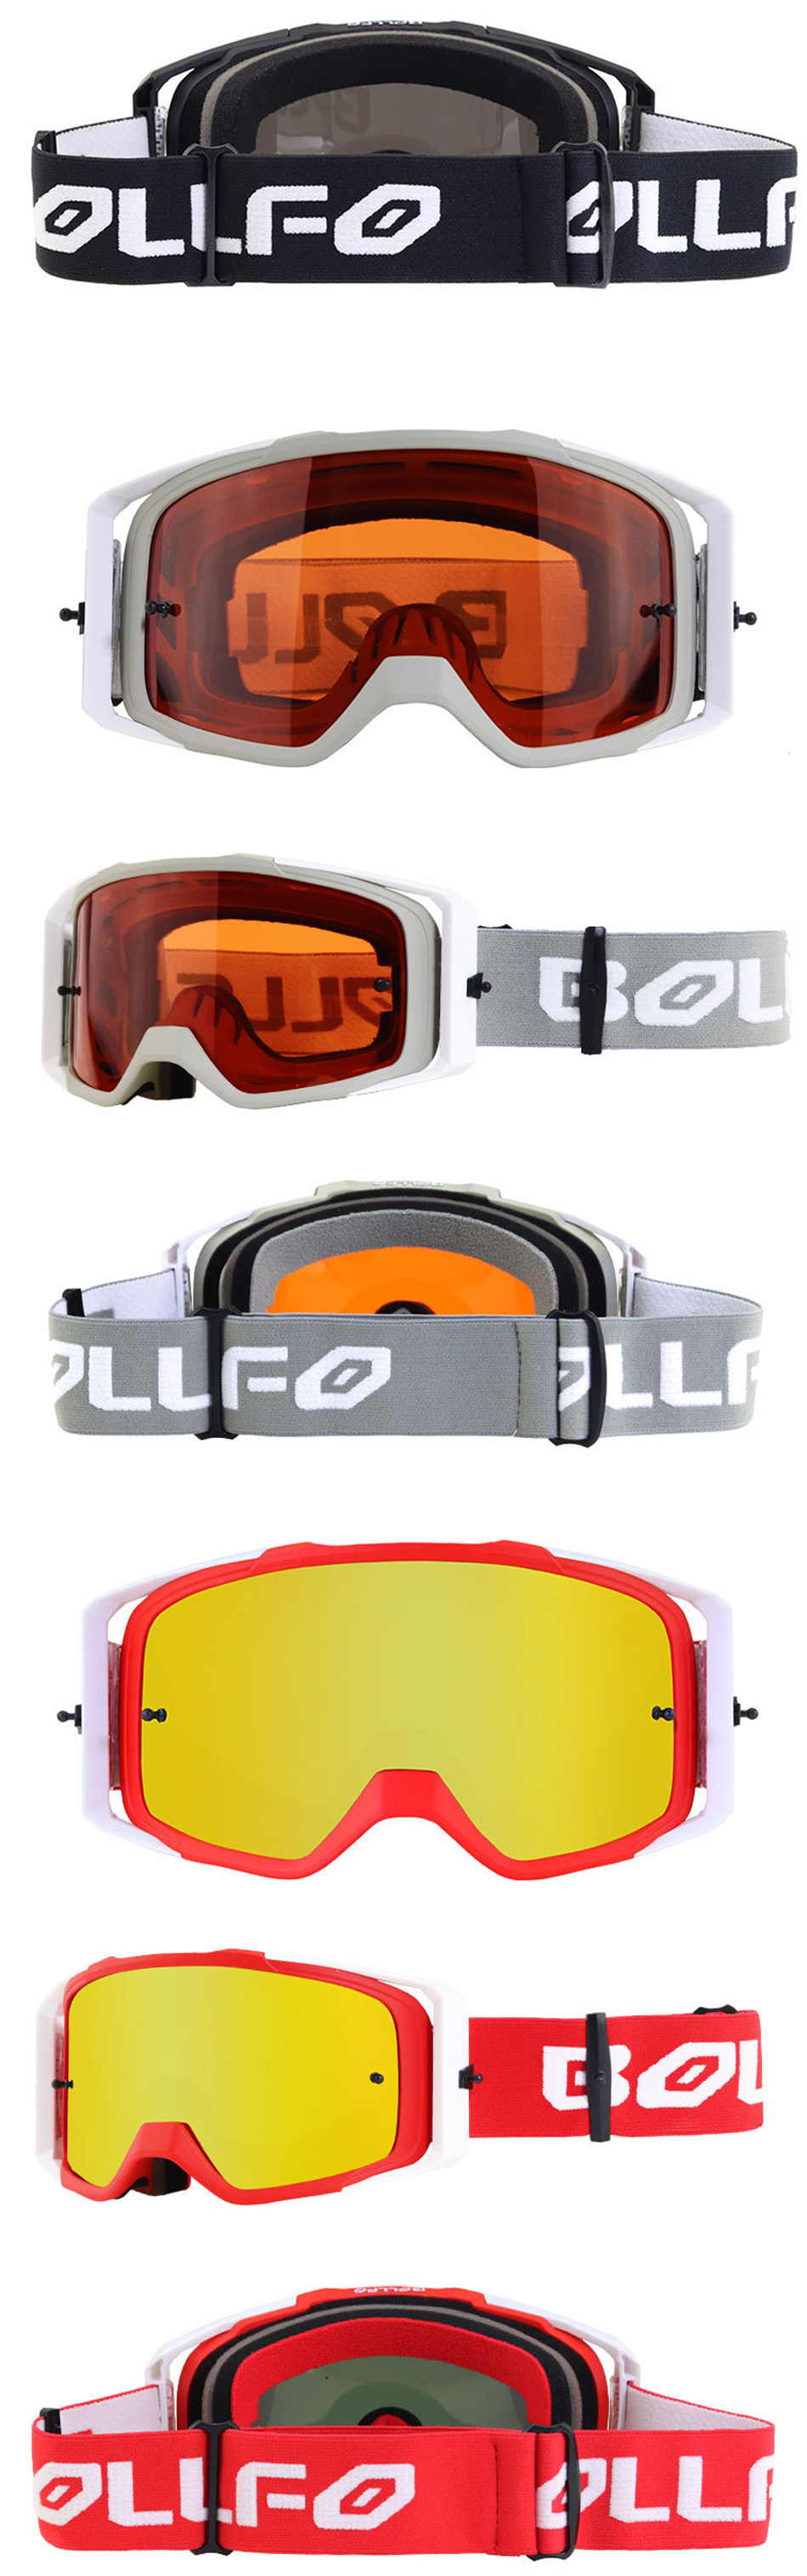 BOLLFO-Winter-Outdoor-Cycling-Snow-Sports-Skiing-Goggles-Anti-fog-Eyewear-Sunglasses-For-Men-Women-1754169-4